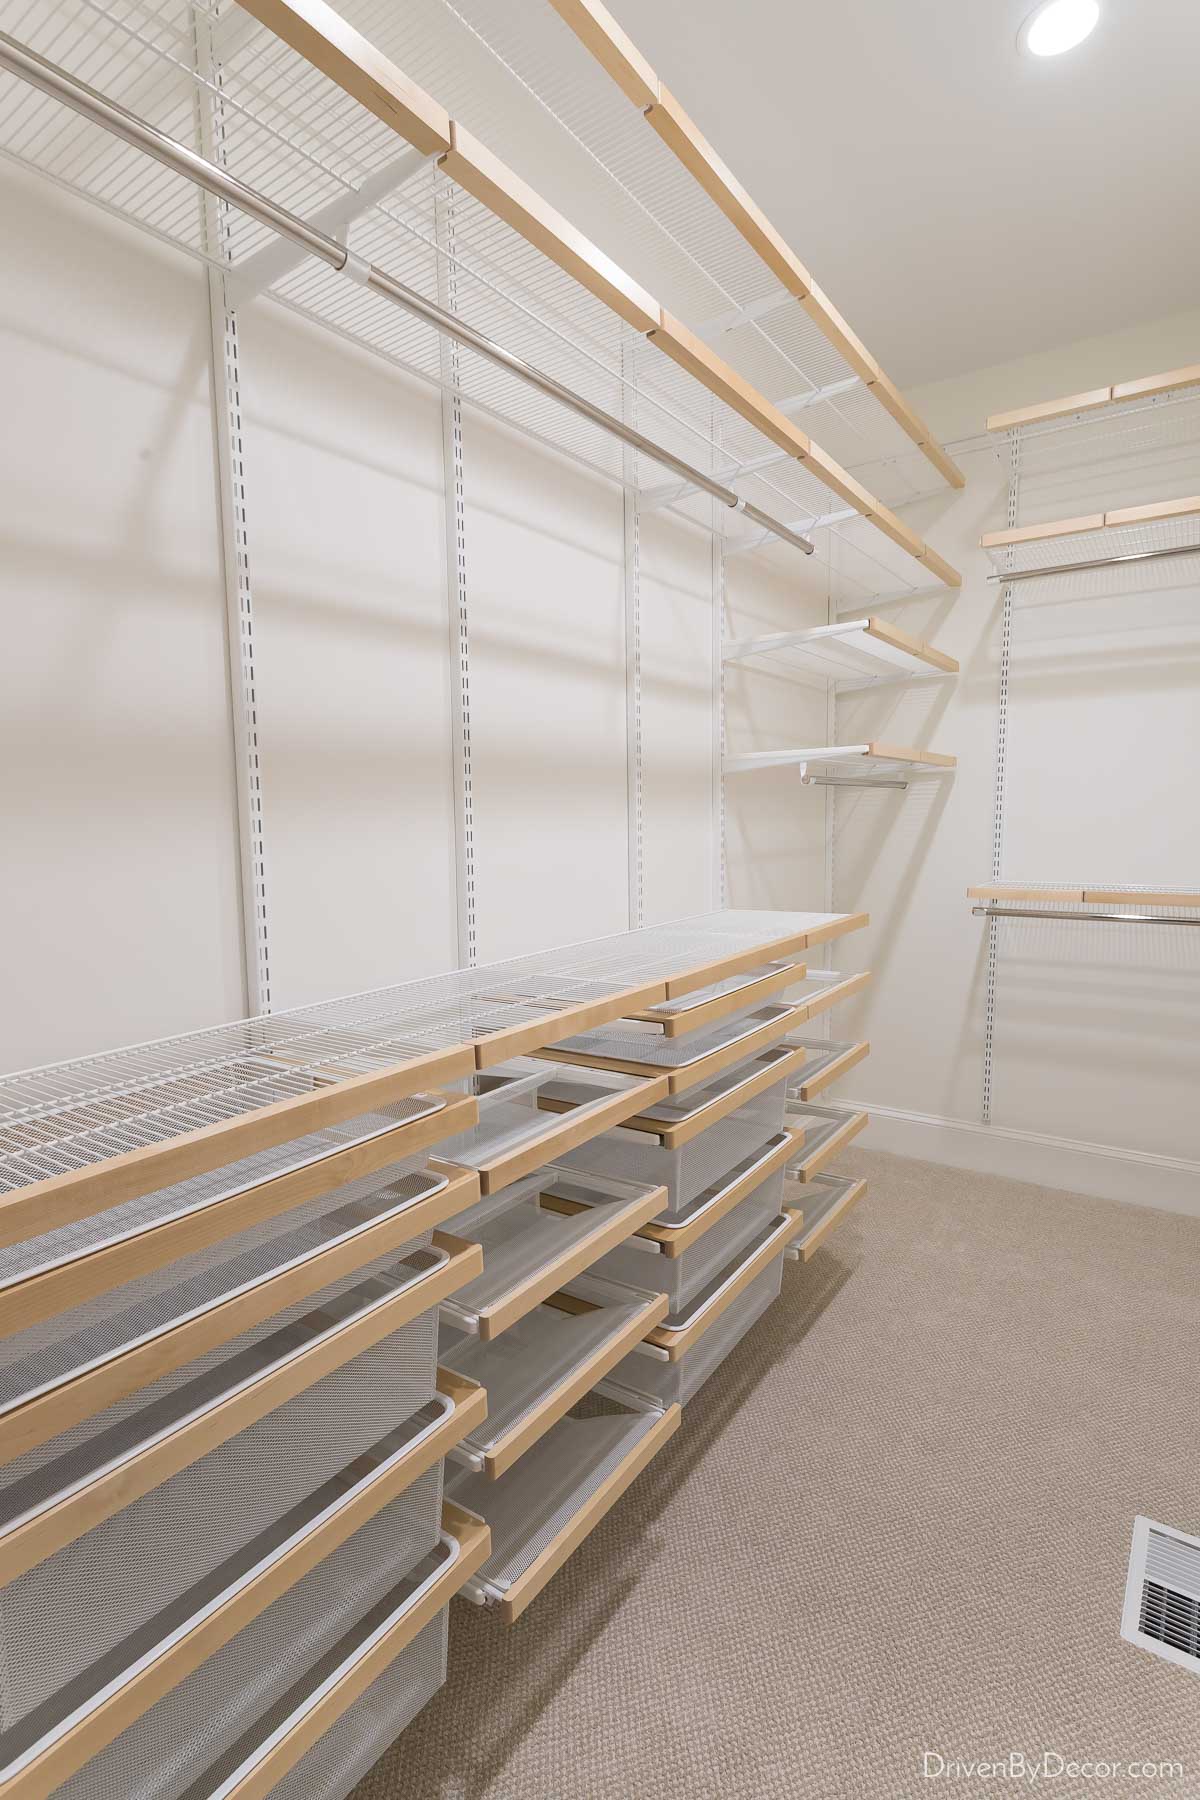 Floor to ceiling modular shoe shelves with decorative trim